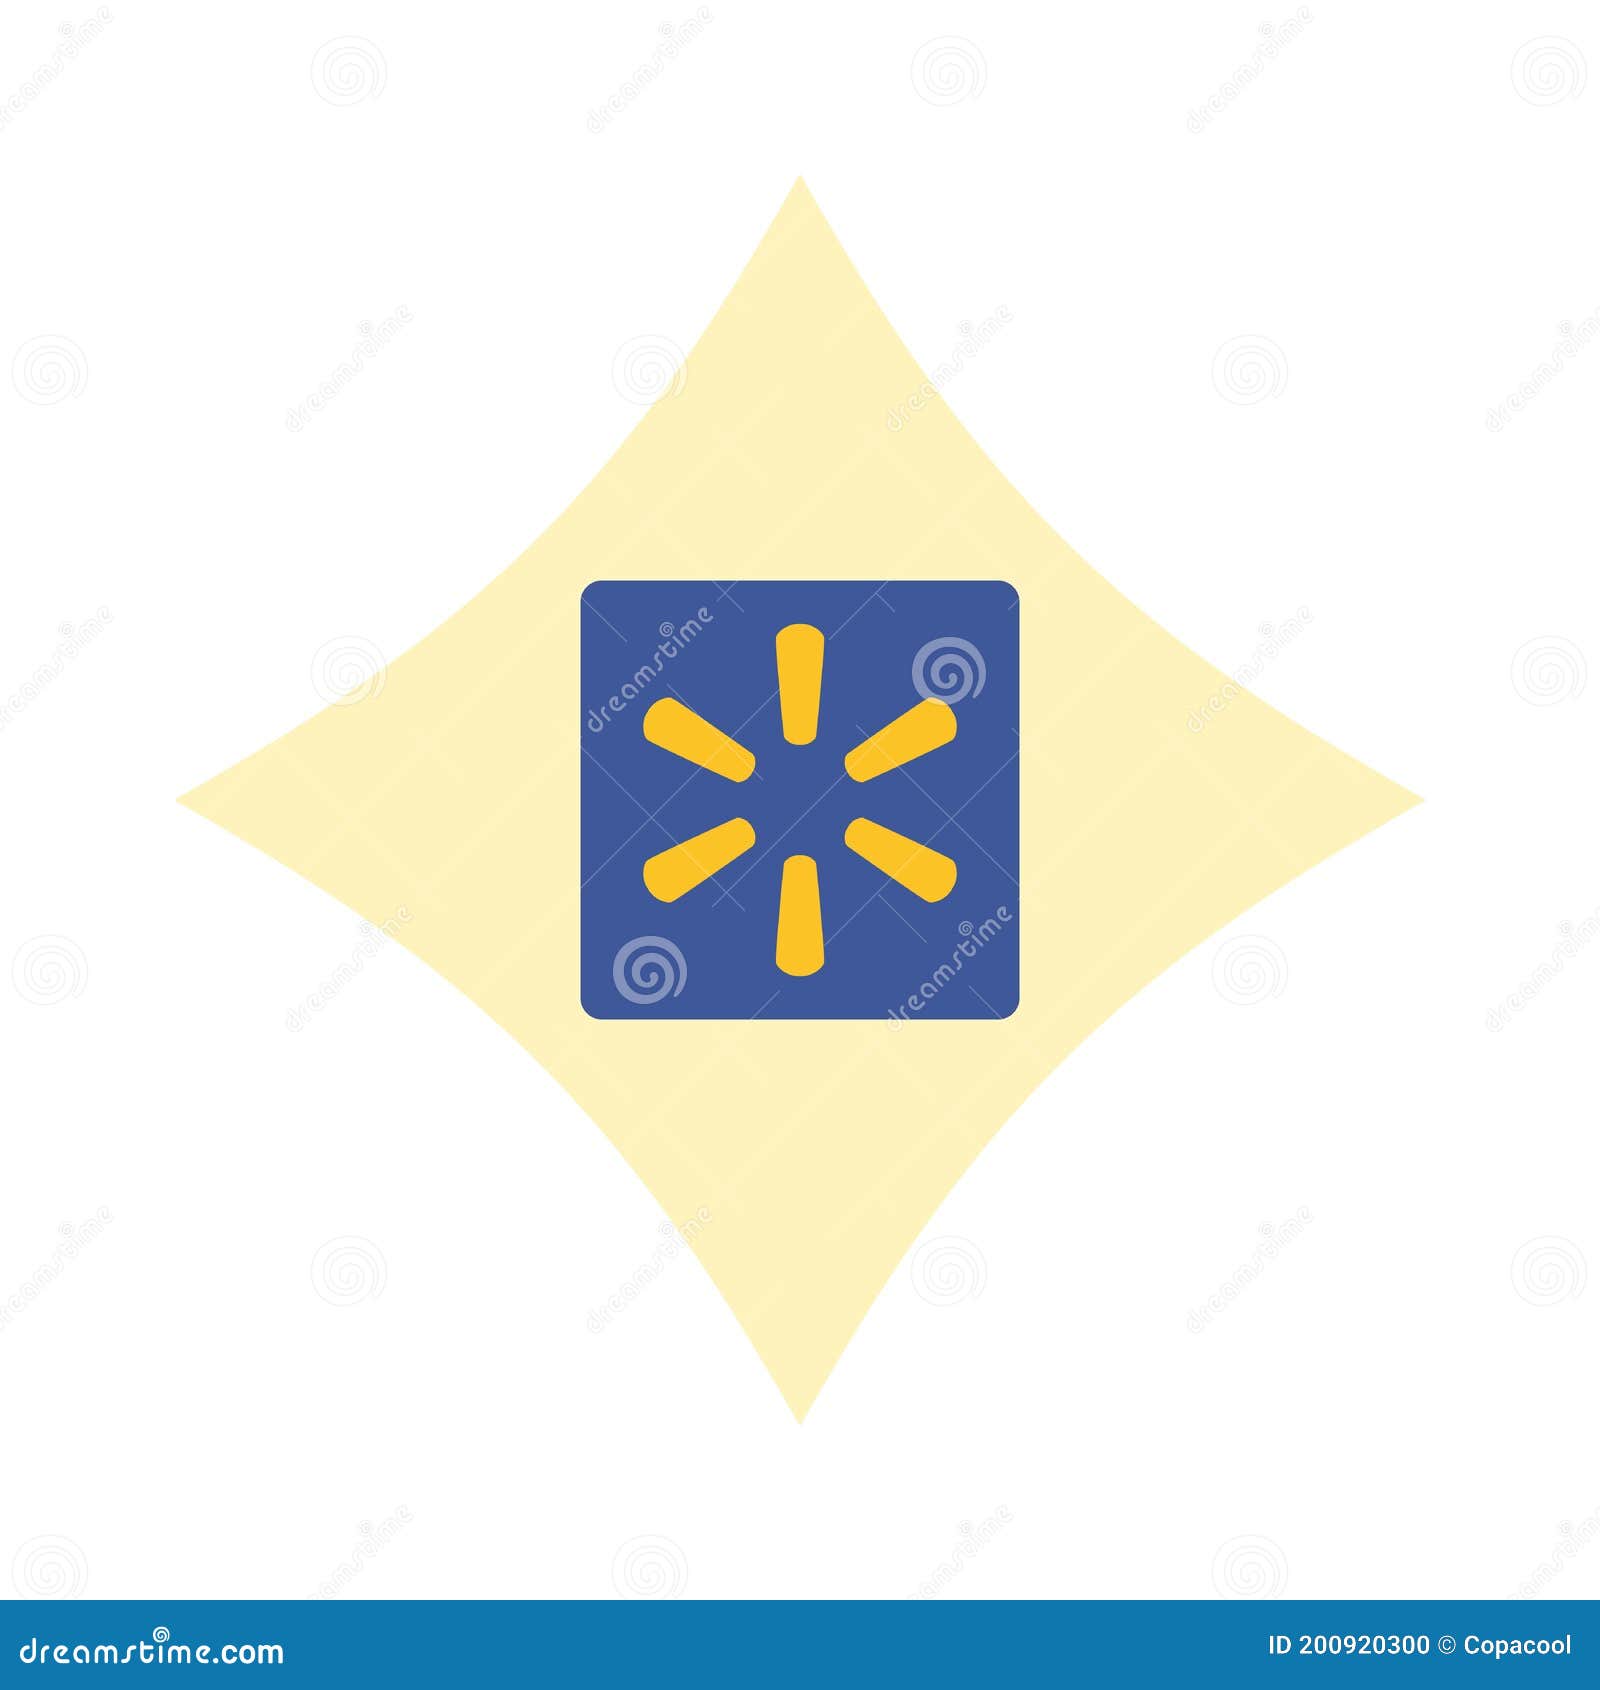 Walmart Logo. Walmart App Icon. Walmart.com is Multinational Retailing ...